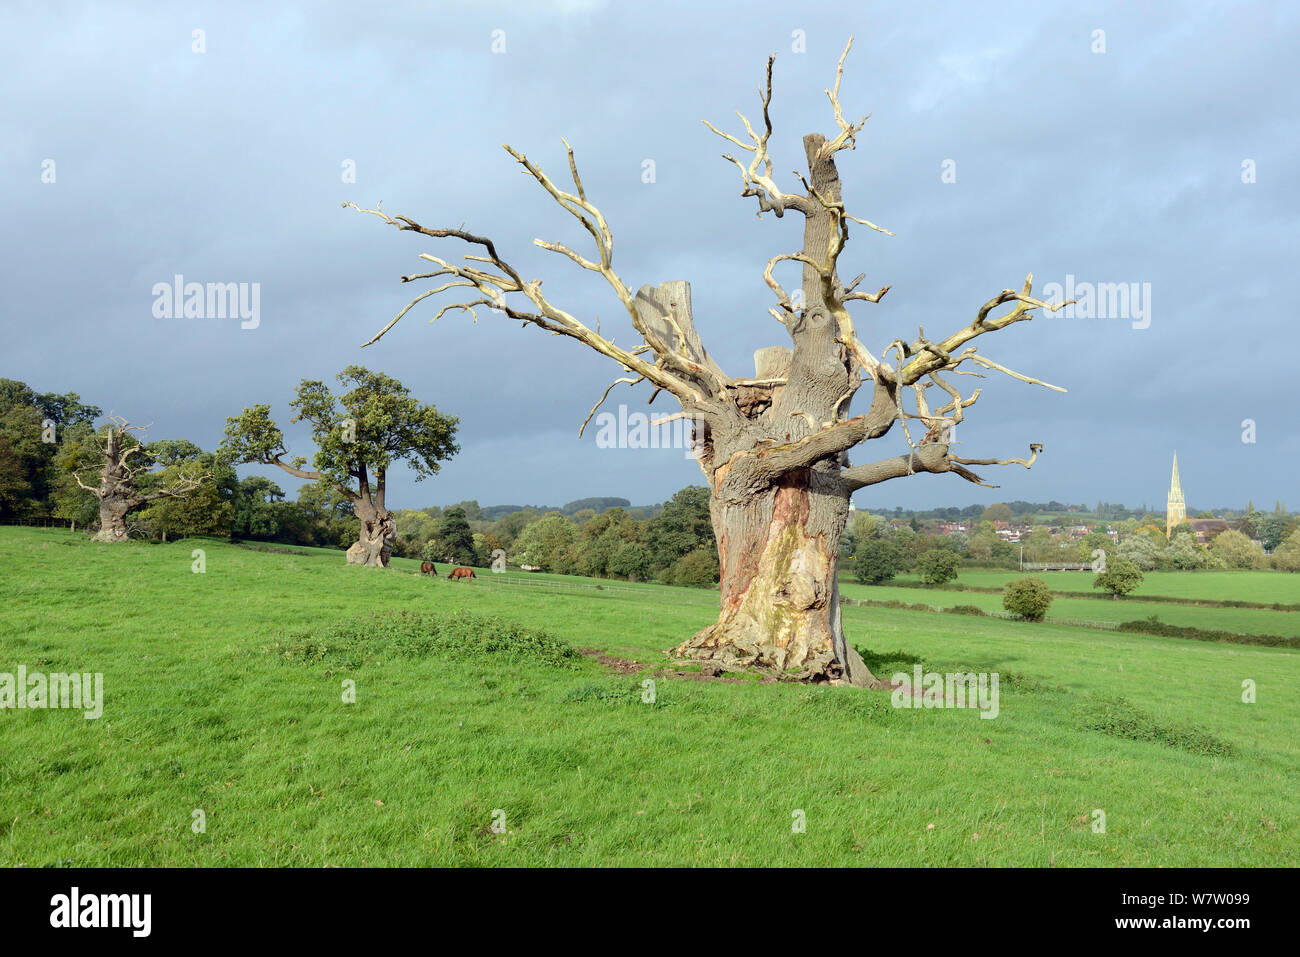 Veterano muerto el roble (Quercus robur), con corteza dañada por caballo, Upton-upton-Severn, Worcestershire, Inglaterra, Reino Unido, Octubre. Foto de stock